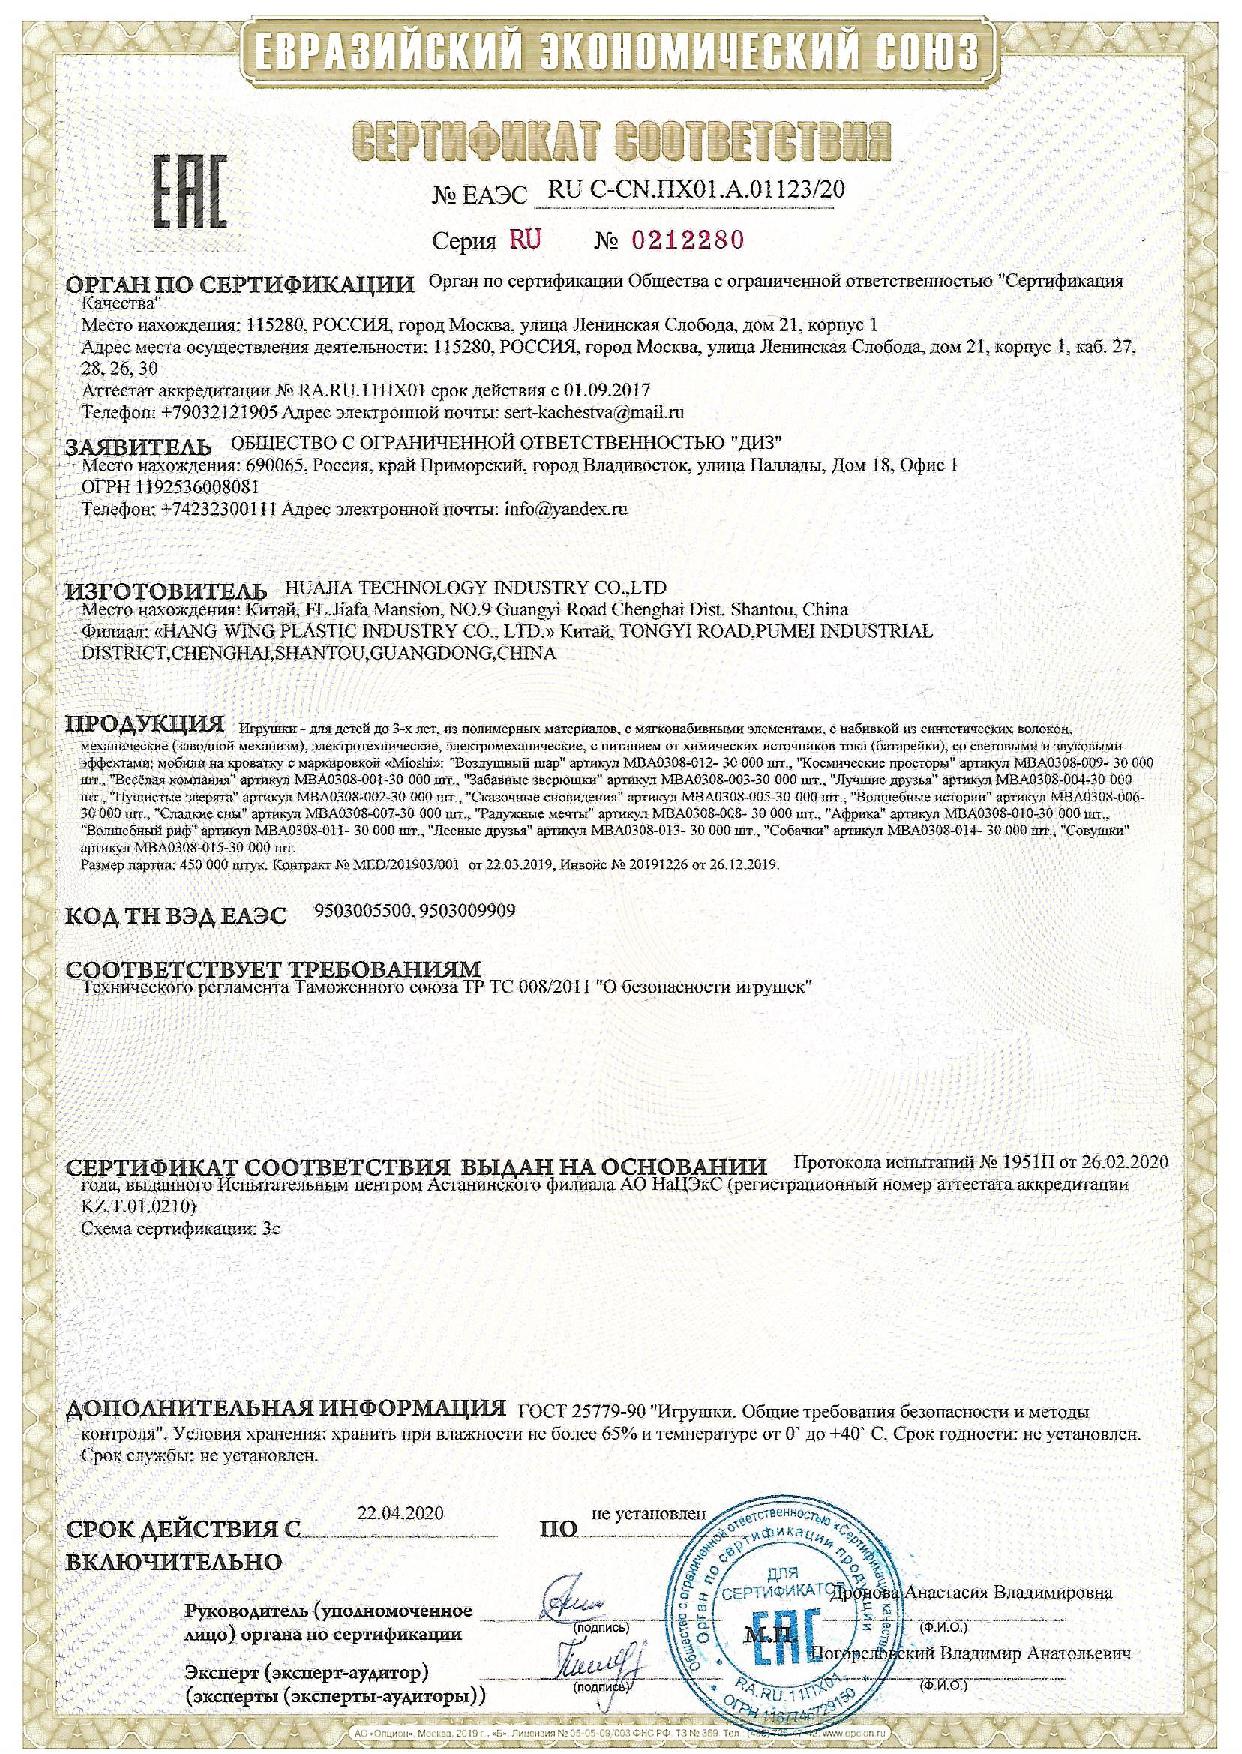 ЕАЭС RU C-CN.ПХ01.А.01123 20: /images/certificates/EAES-RU-C-CN.PH01.A.01123-20.jpg